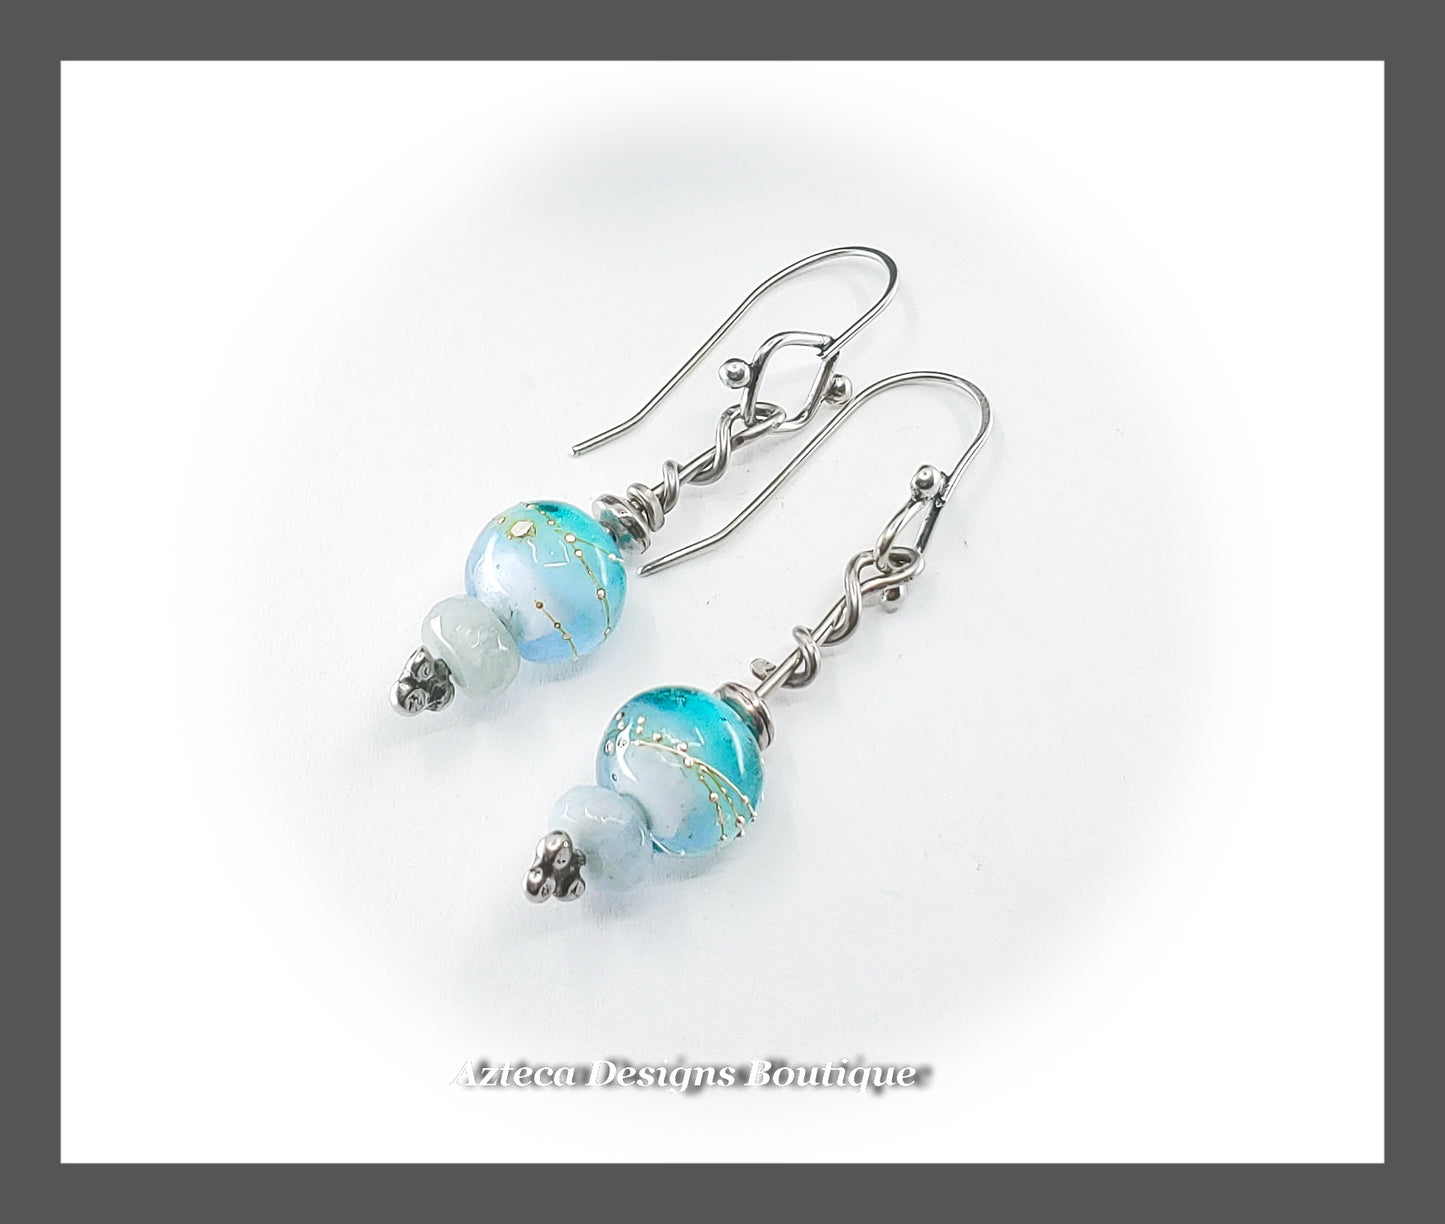 Aquamarine + Glass Lampwork + Argentium Silver + Hand Fabricated Artisan Earrings